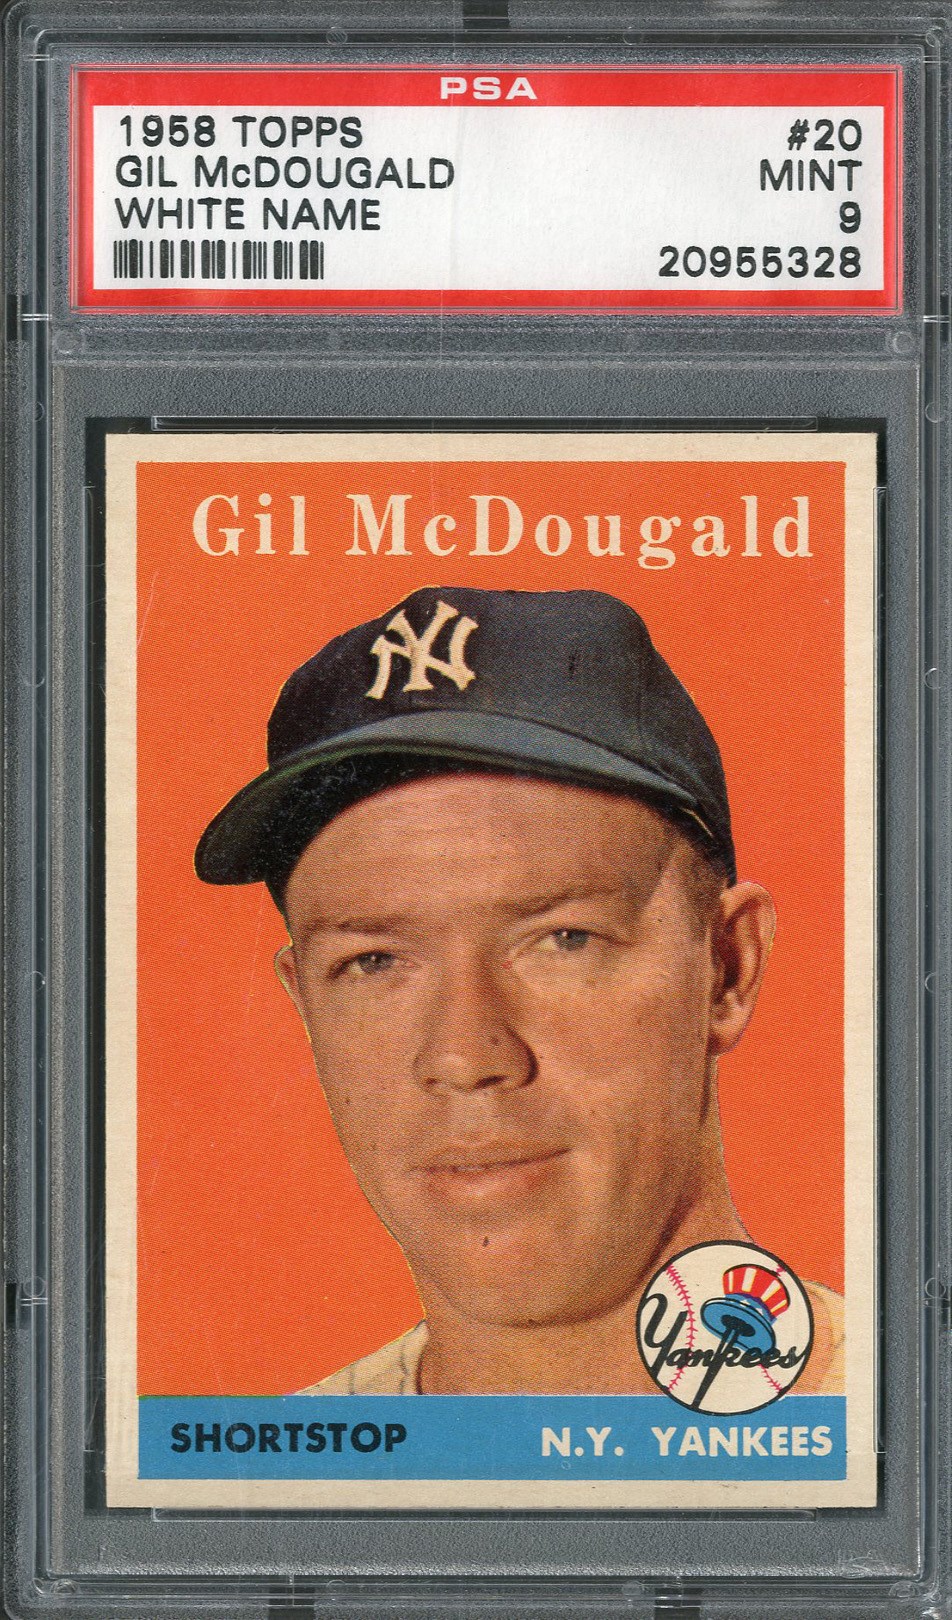 - 1958 Topps #20 Gil McDougald (White Name) PSA MINT 9